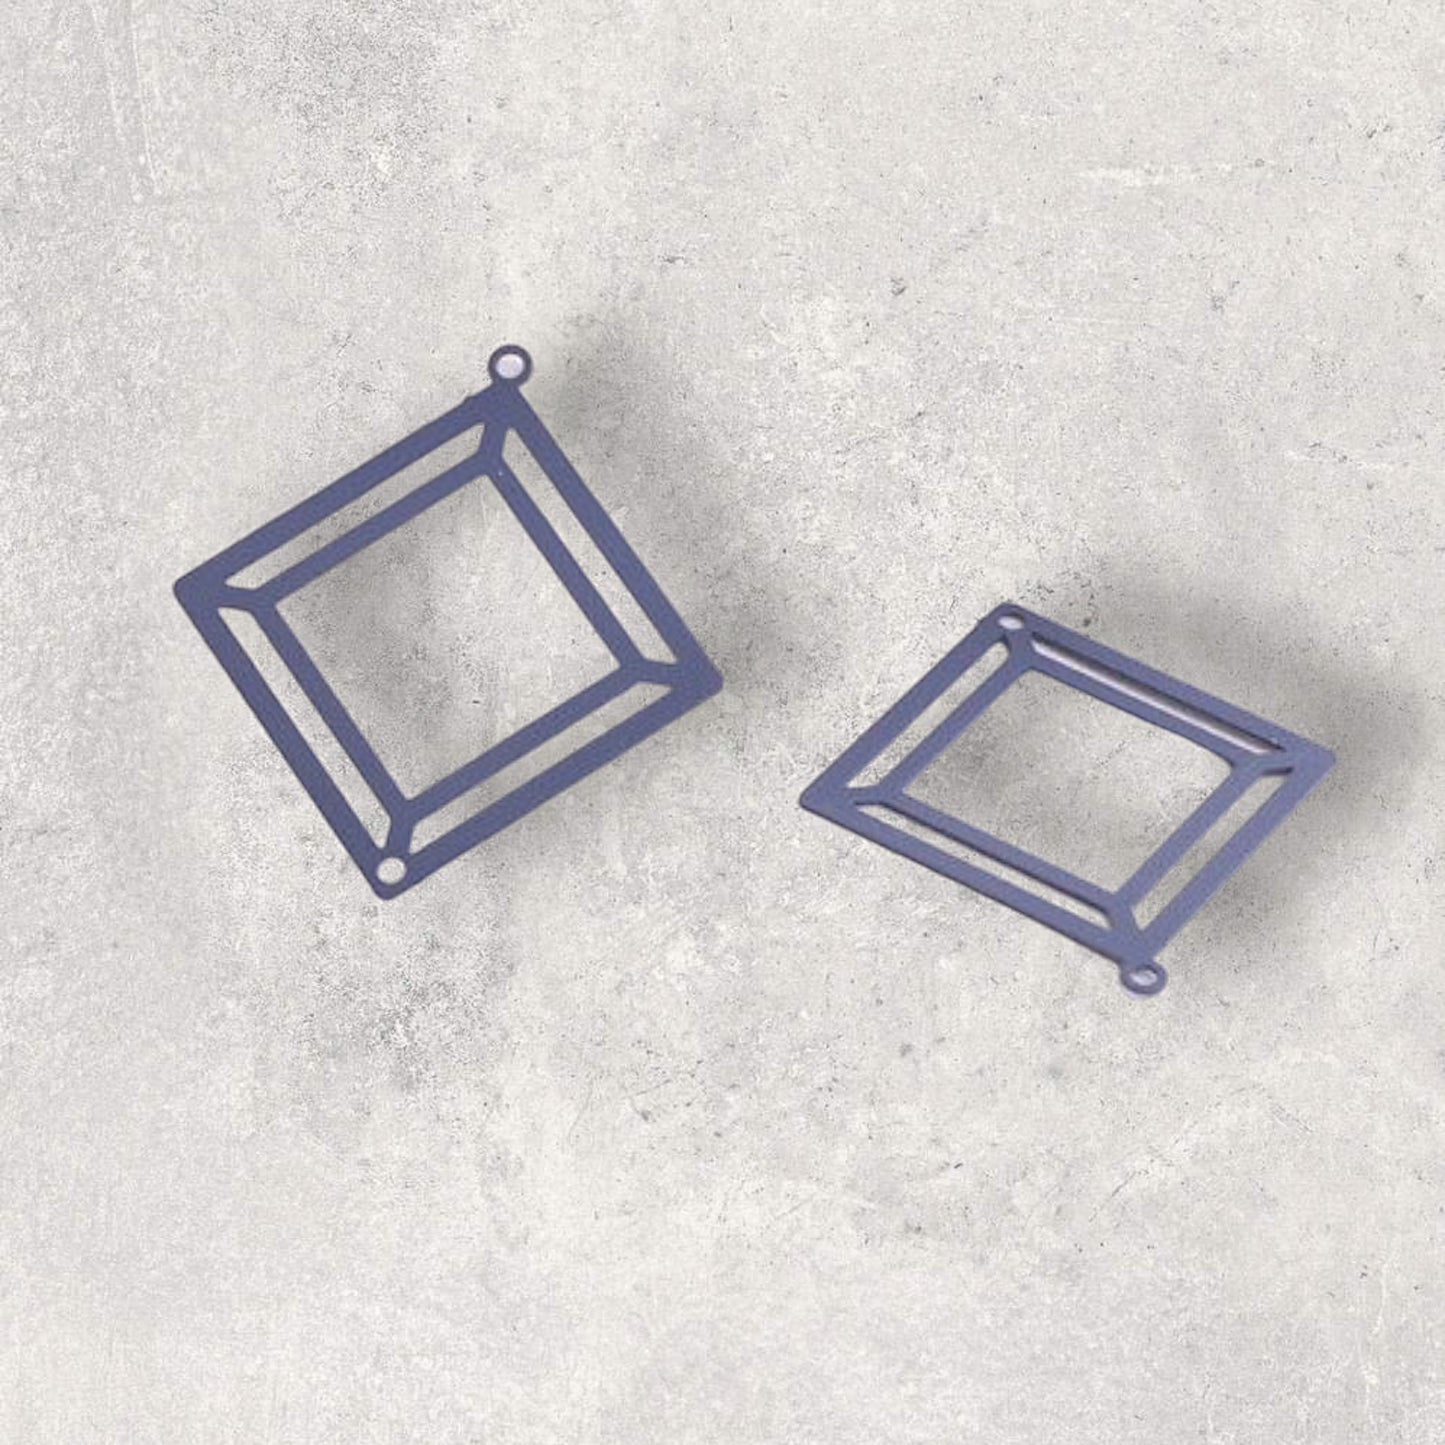 Double Square Diamond Filigree Earring Charm - 2ea (1 pair)